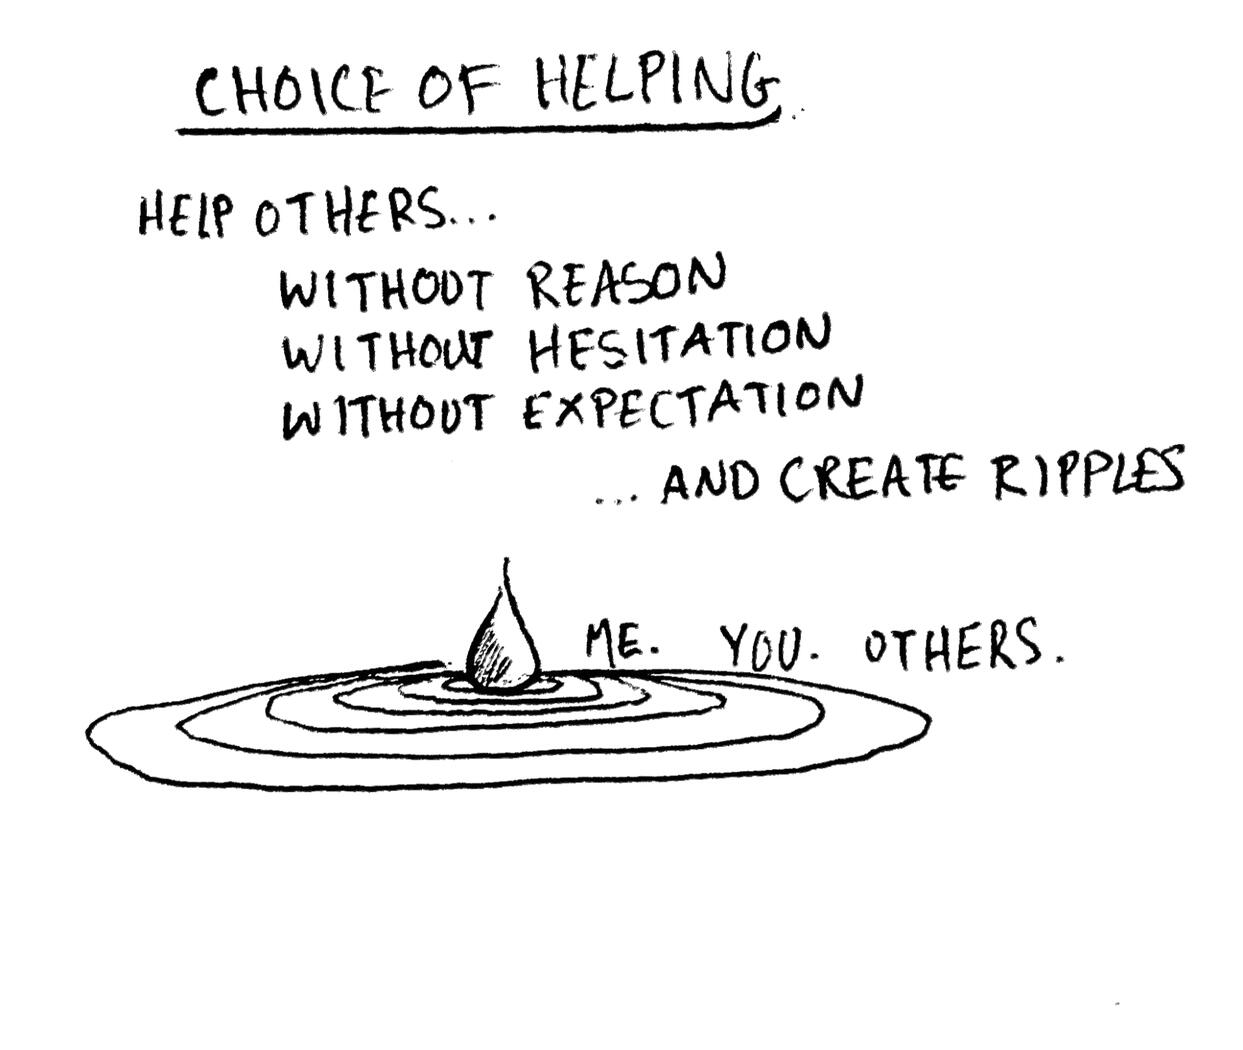 Choice of helping